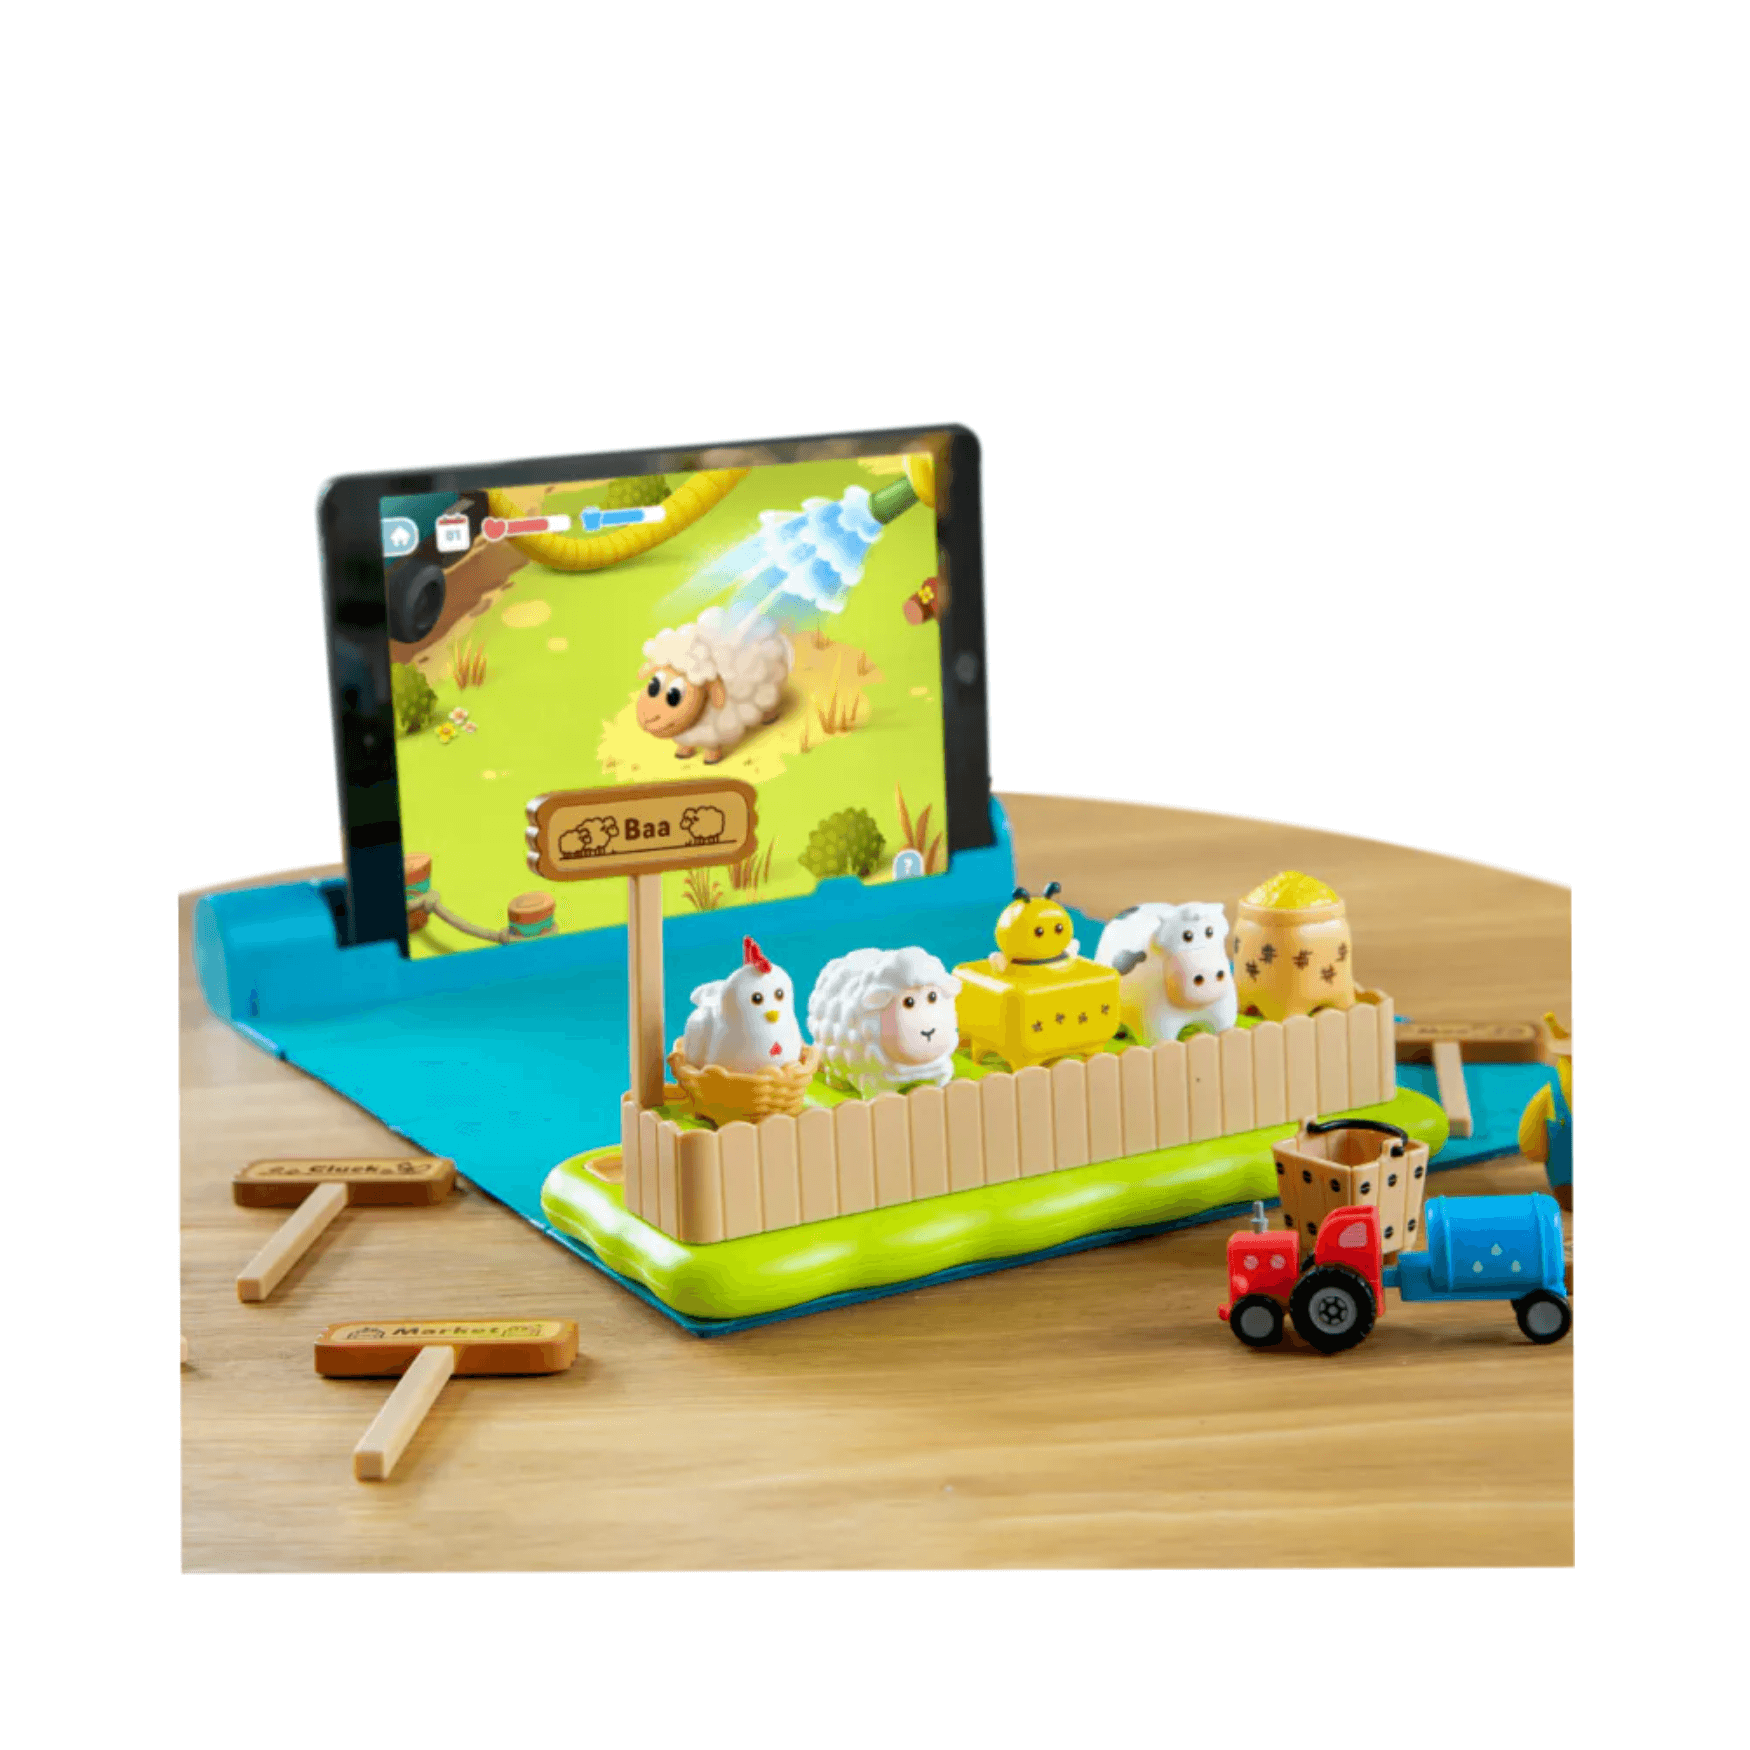 PlayShifu Plugo Series - Plugo Farm / Plugo Link / Plugo Count / Plugo Tunes / Plugo Letters kids learning & educational